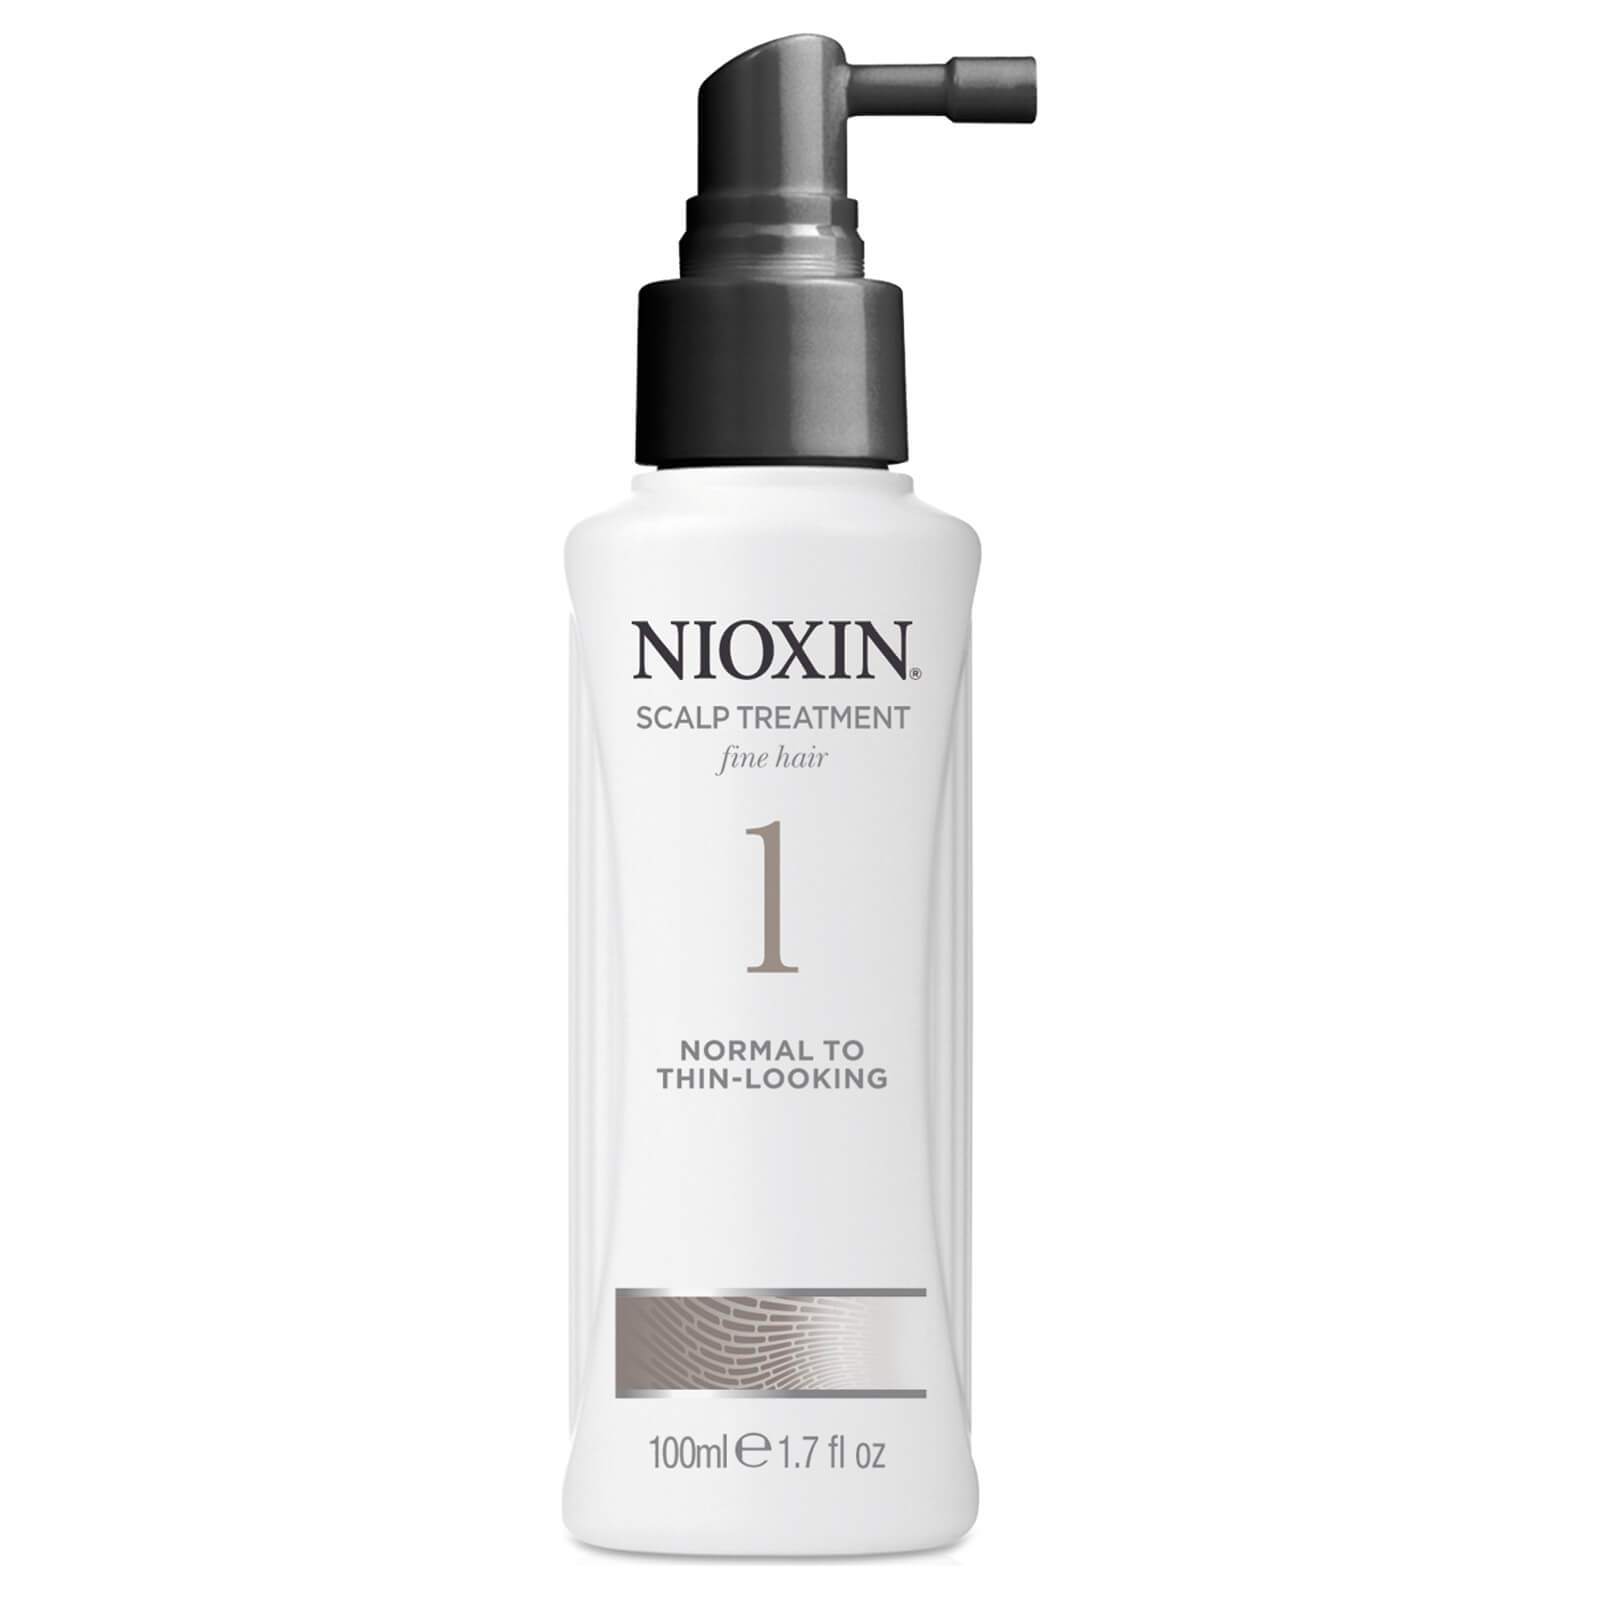 Kit Nioxin System 1 - cabello fino natural (3 productos)